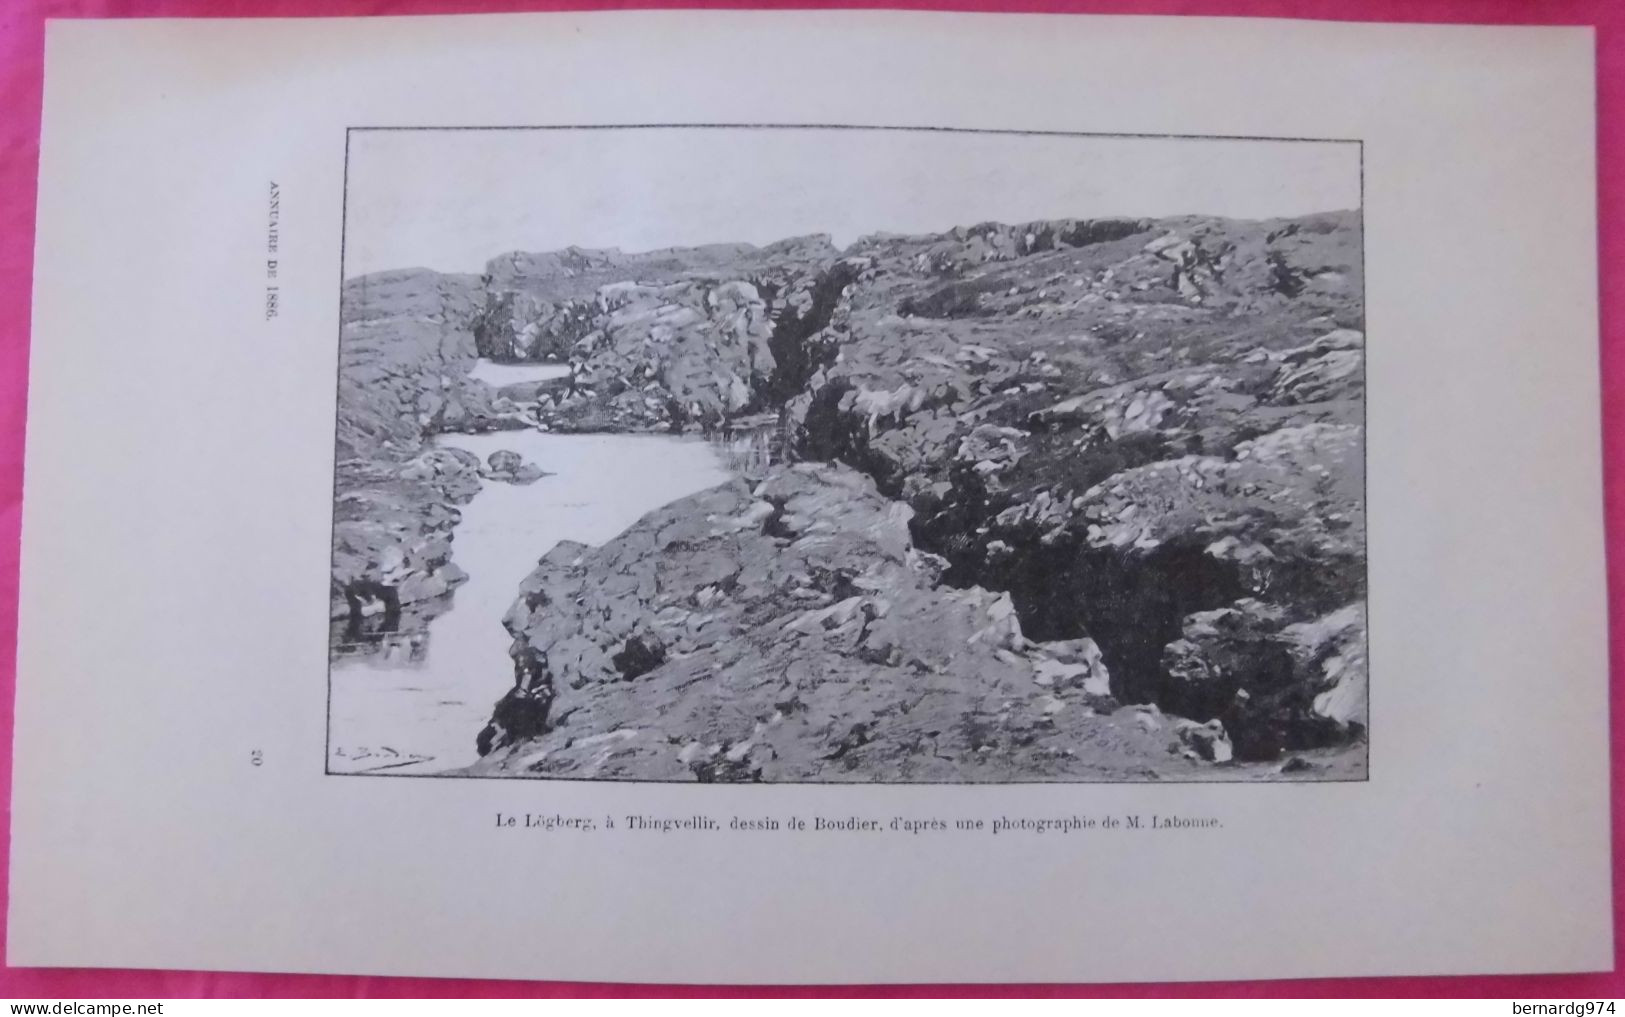 Islande Island : nine antique prints